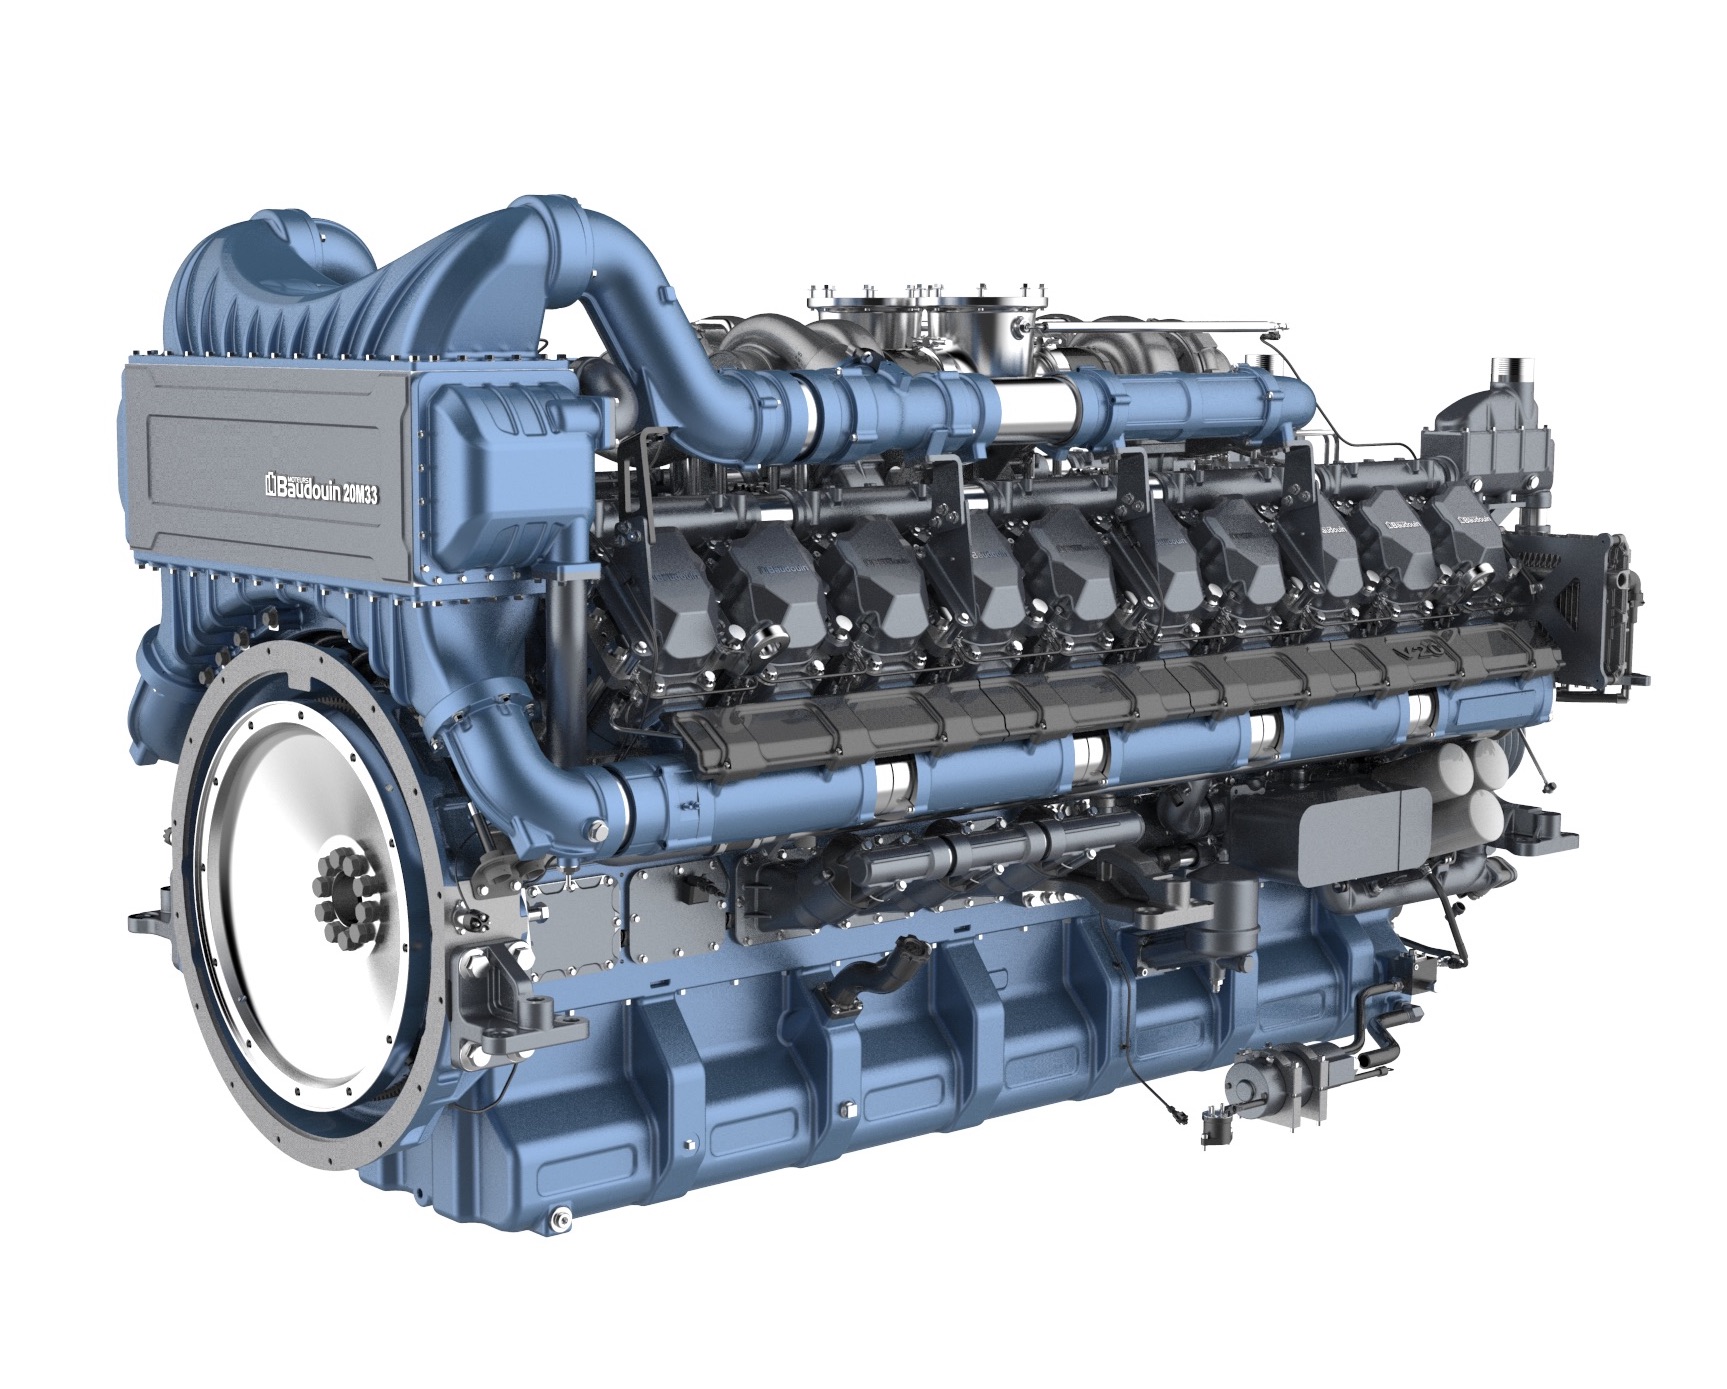 diesel engine for generator set